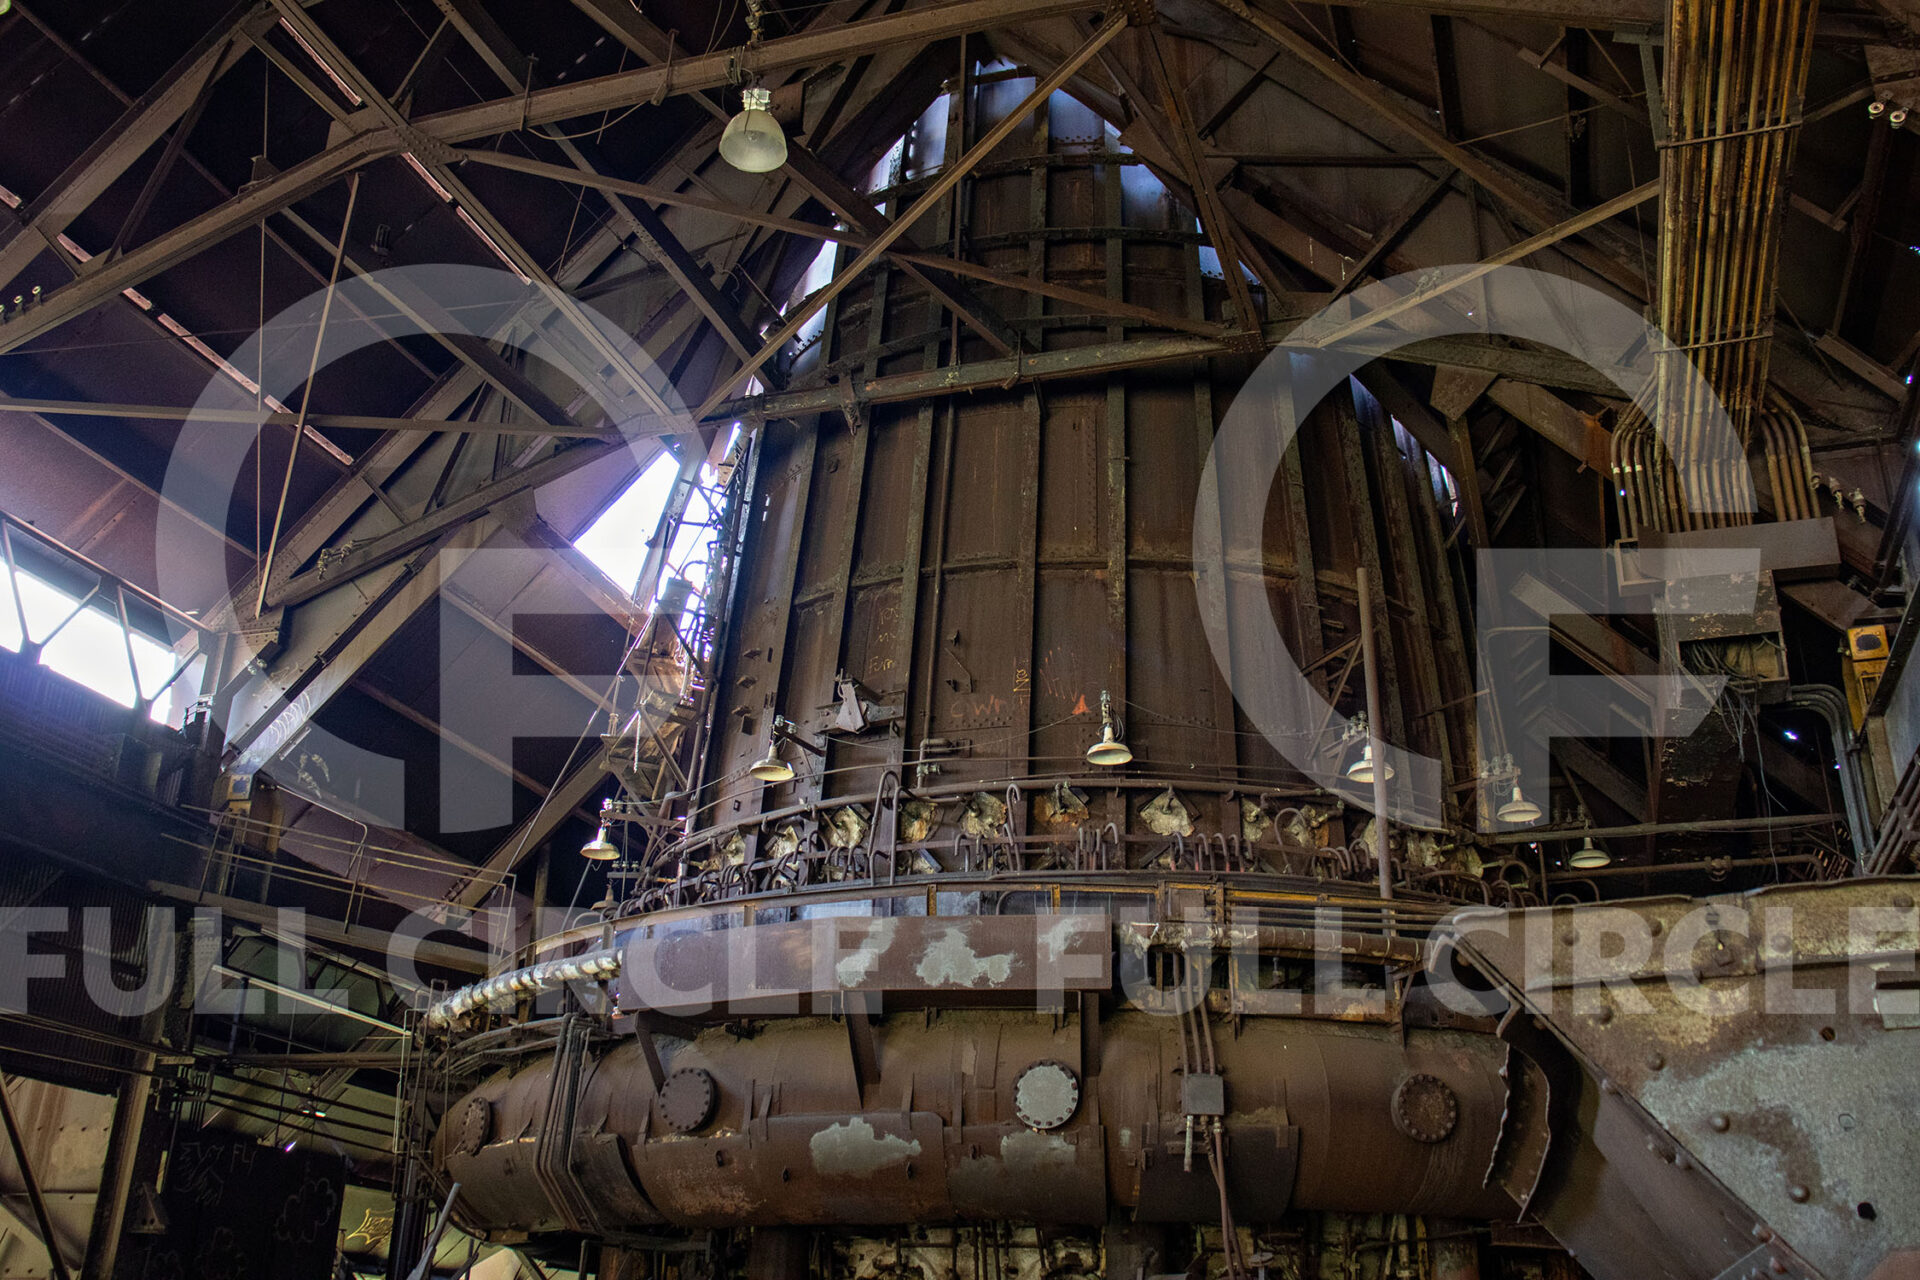 large, rusty blast furnace